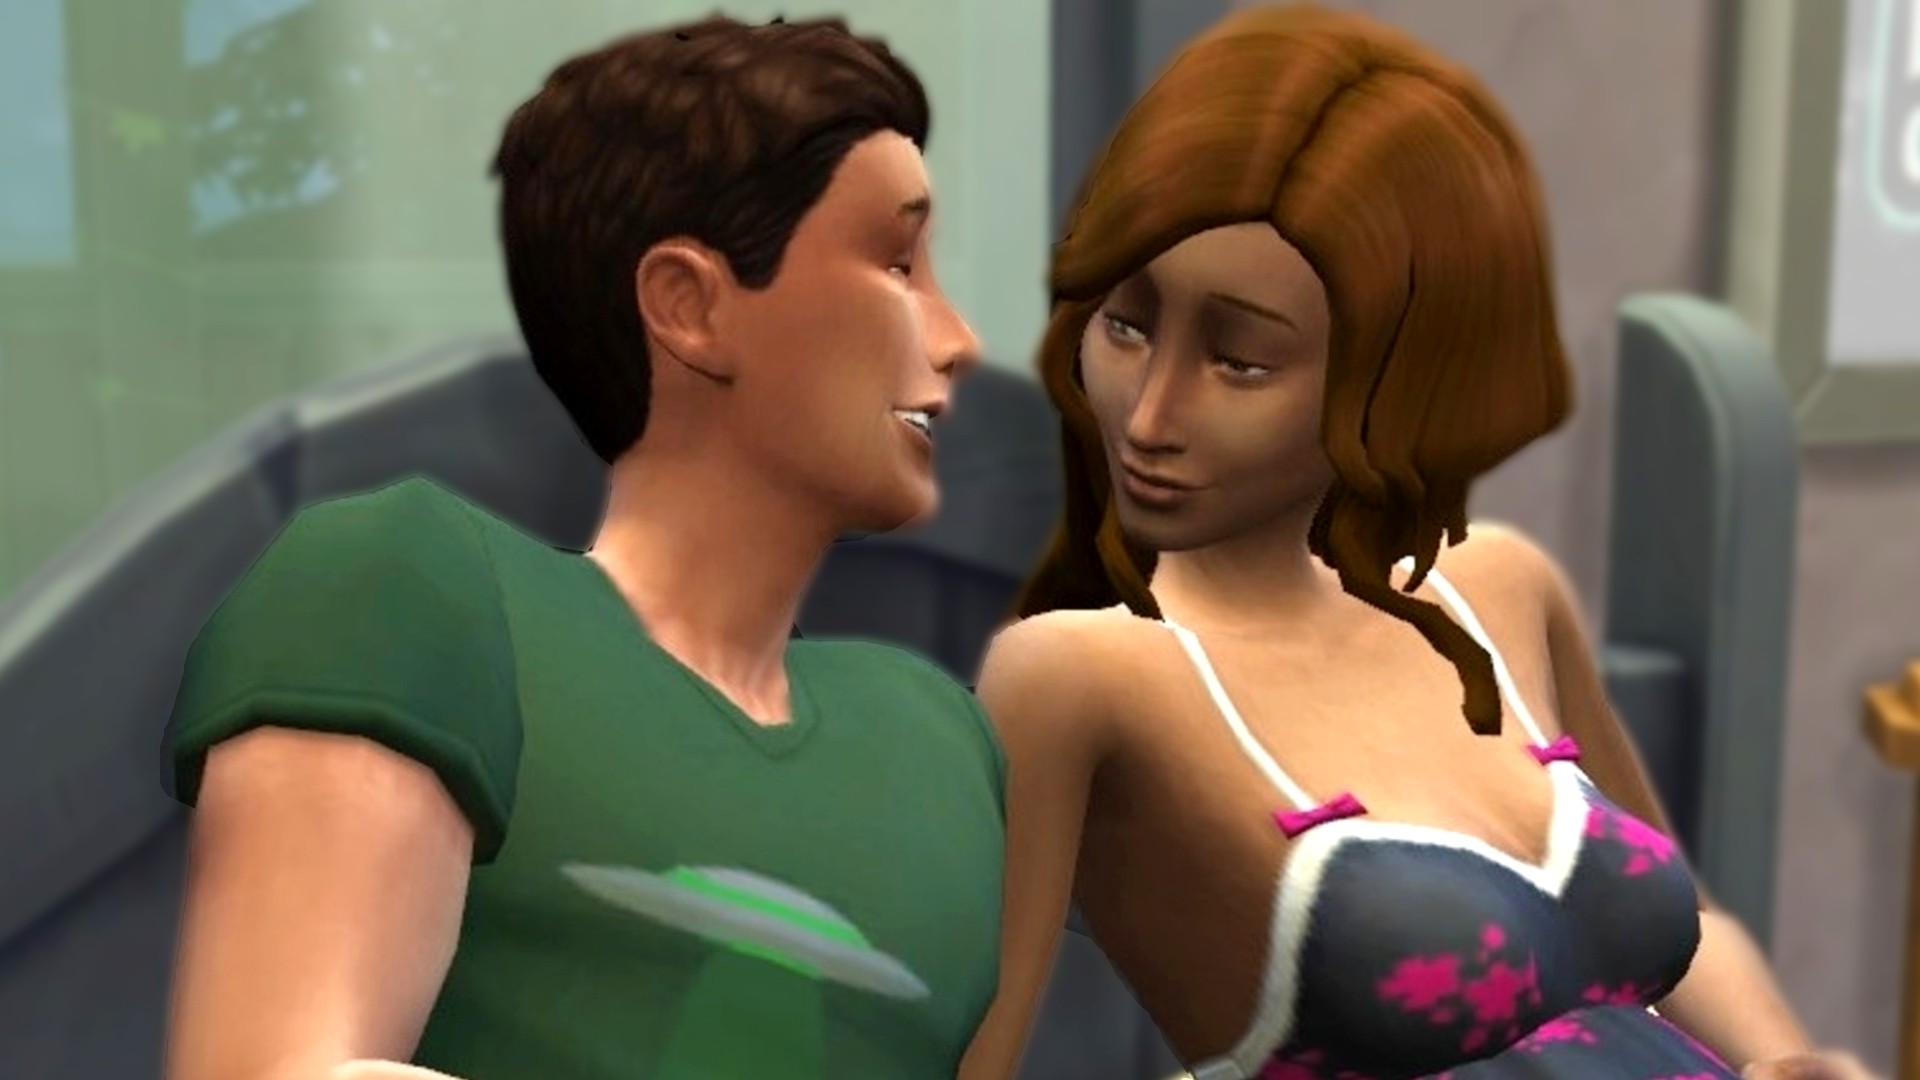 LittleMsSam's Sims 4 Mods — “SimDa” Dating App “SimDa” Dating App can help  you